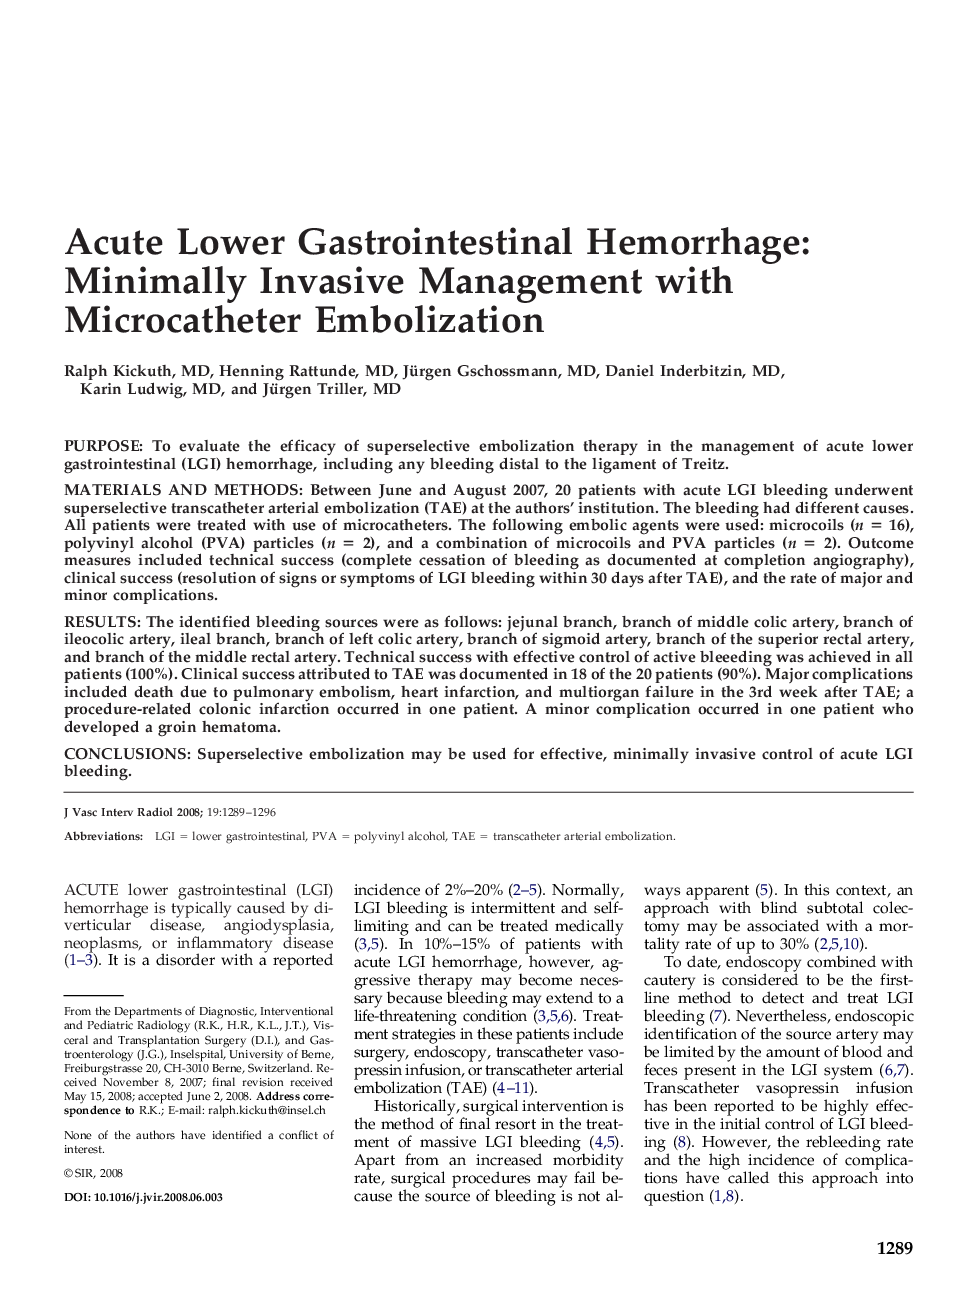 Acute Lower Gastrointestinal Hemorrhage: Minimally Invasive Management with Microcatheter Embolization